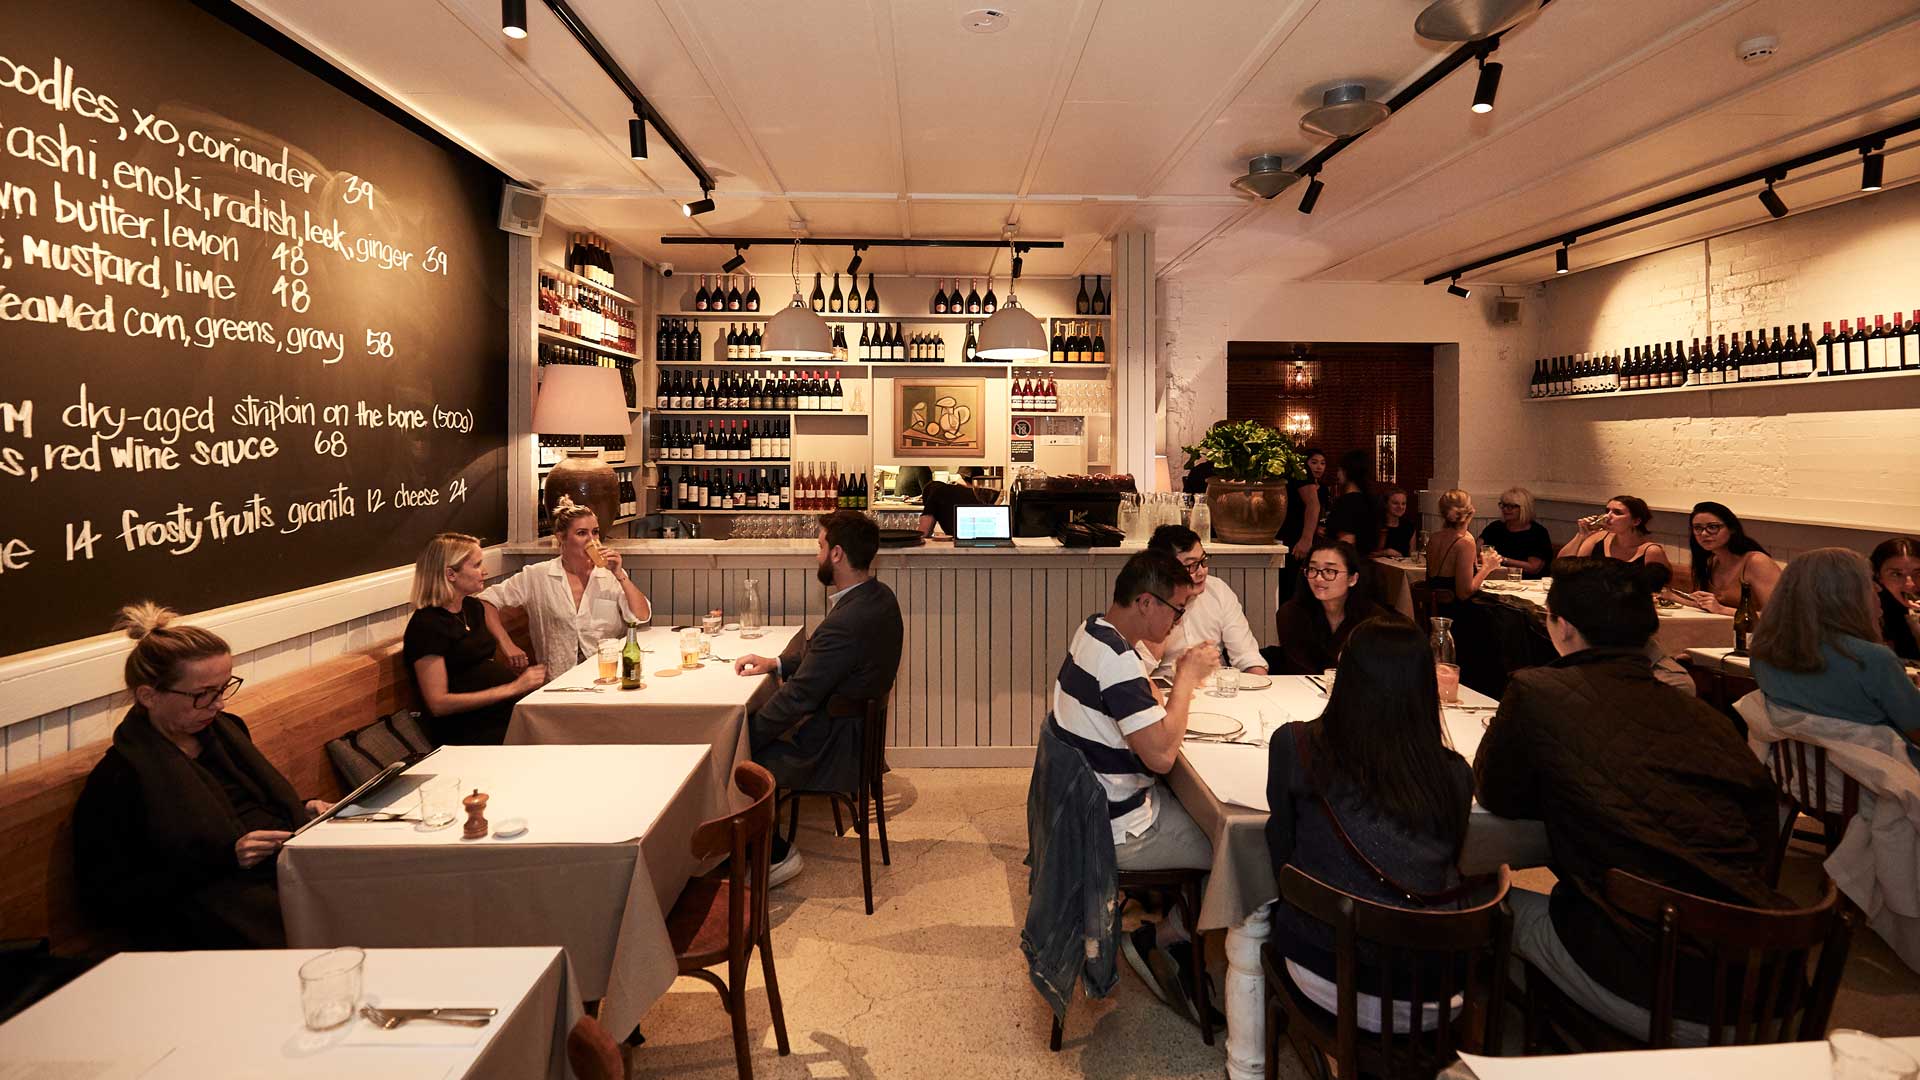 Merivale's Award-Winning Lotus Restaurant Has Reopened with Dan Hong at the Helm